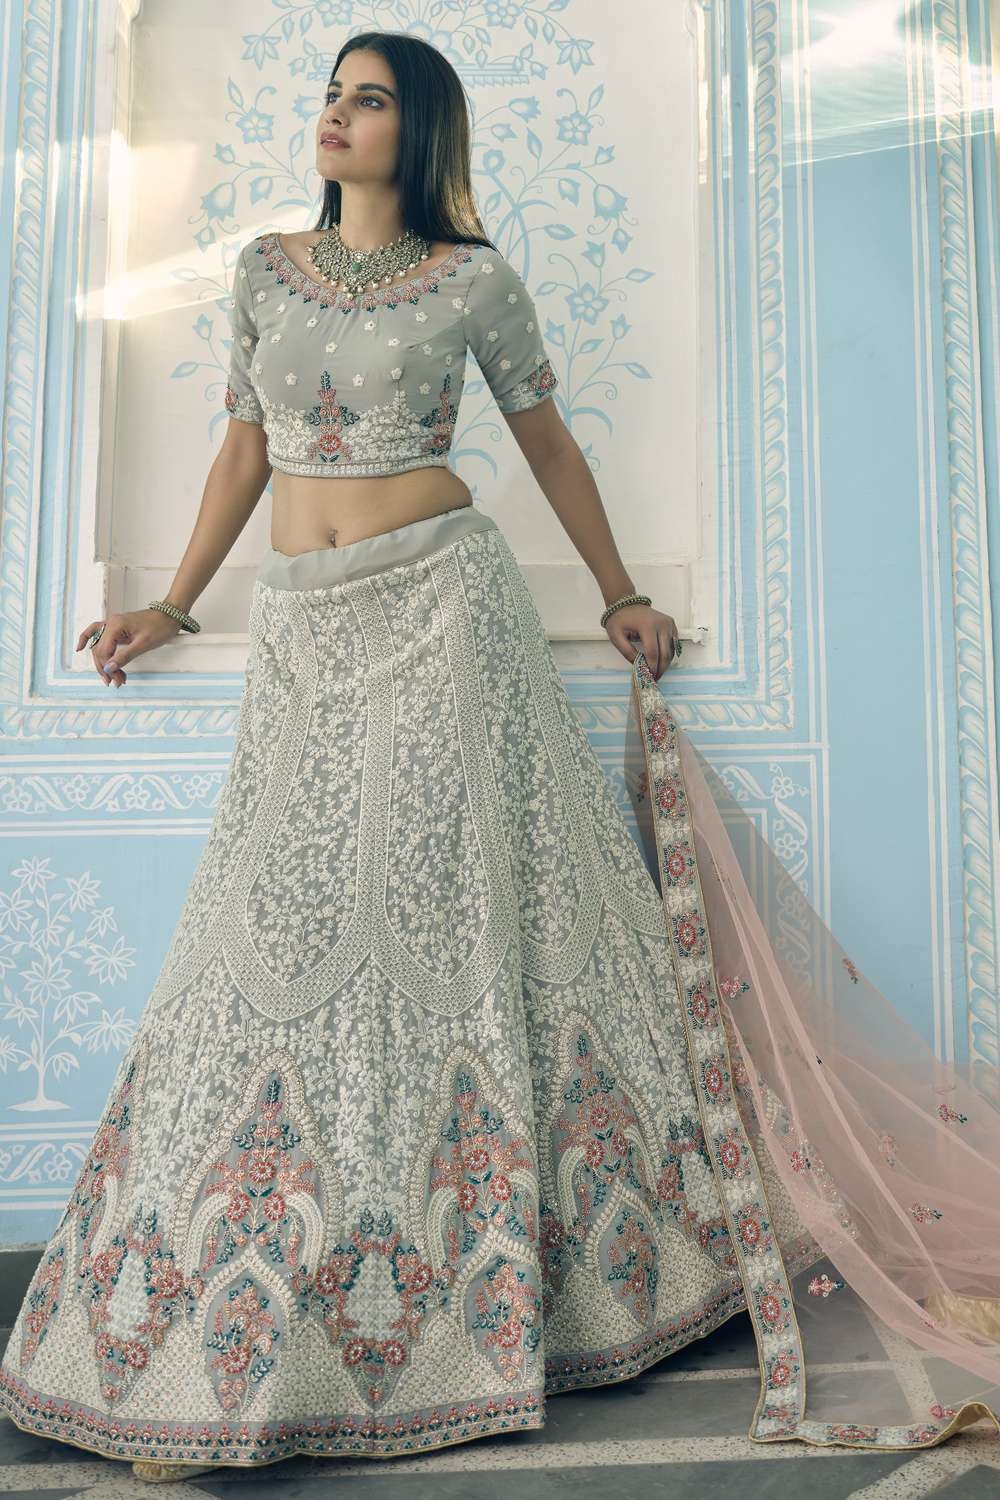 Zeel Clothing Women's Zari & Sequins Embroidered Net Lehenga Choli with  Dupatta (4105-Grey-Wedding-Stylish-Latest-New; Free Size) : Amazon.in:  Fashion